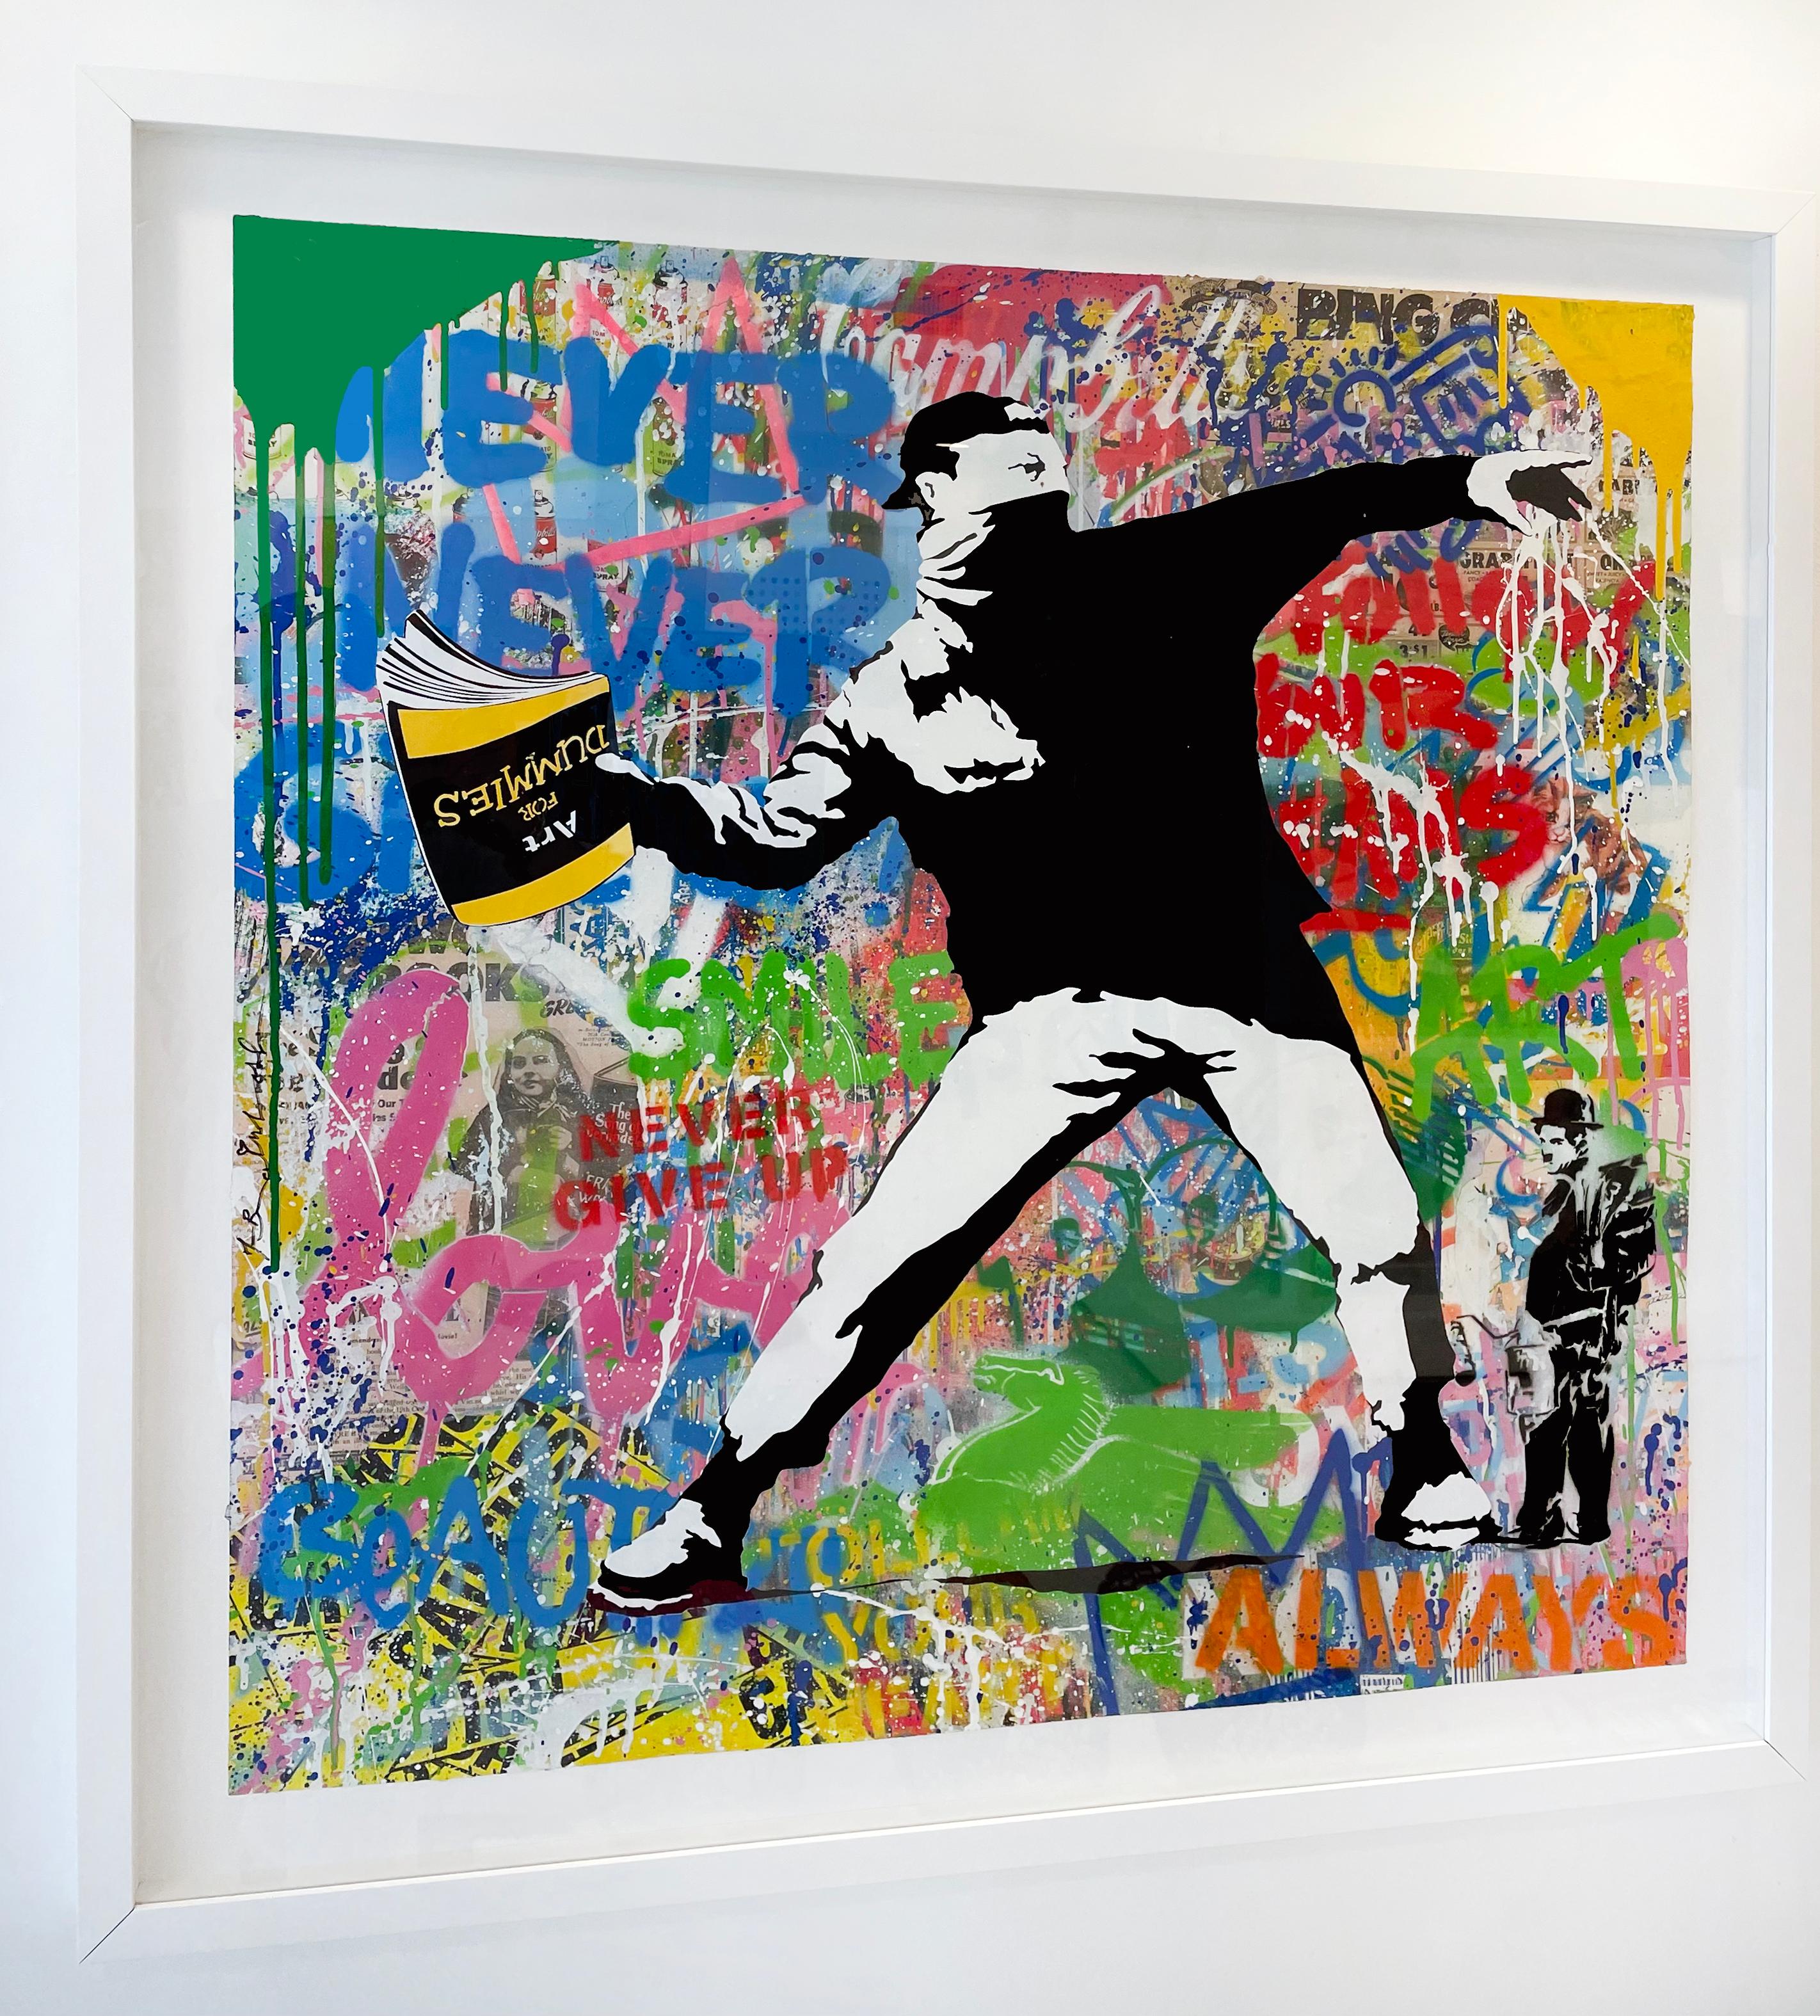 Artist:  Brainwash, Mr.
Title:  Banksy Thrower
Series:  Bansky Thrower
Date:  2022
Medium:  Silkscreen and Mixed Media on Paper
Unframed Dimensions:  36